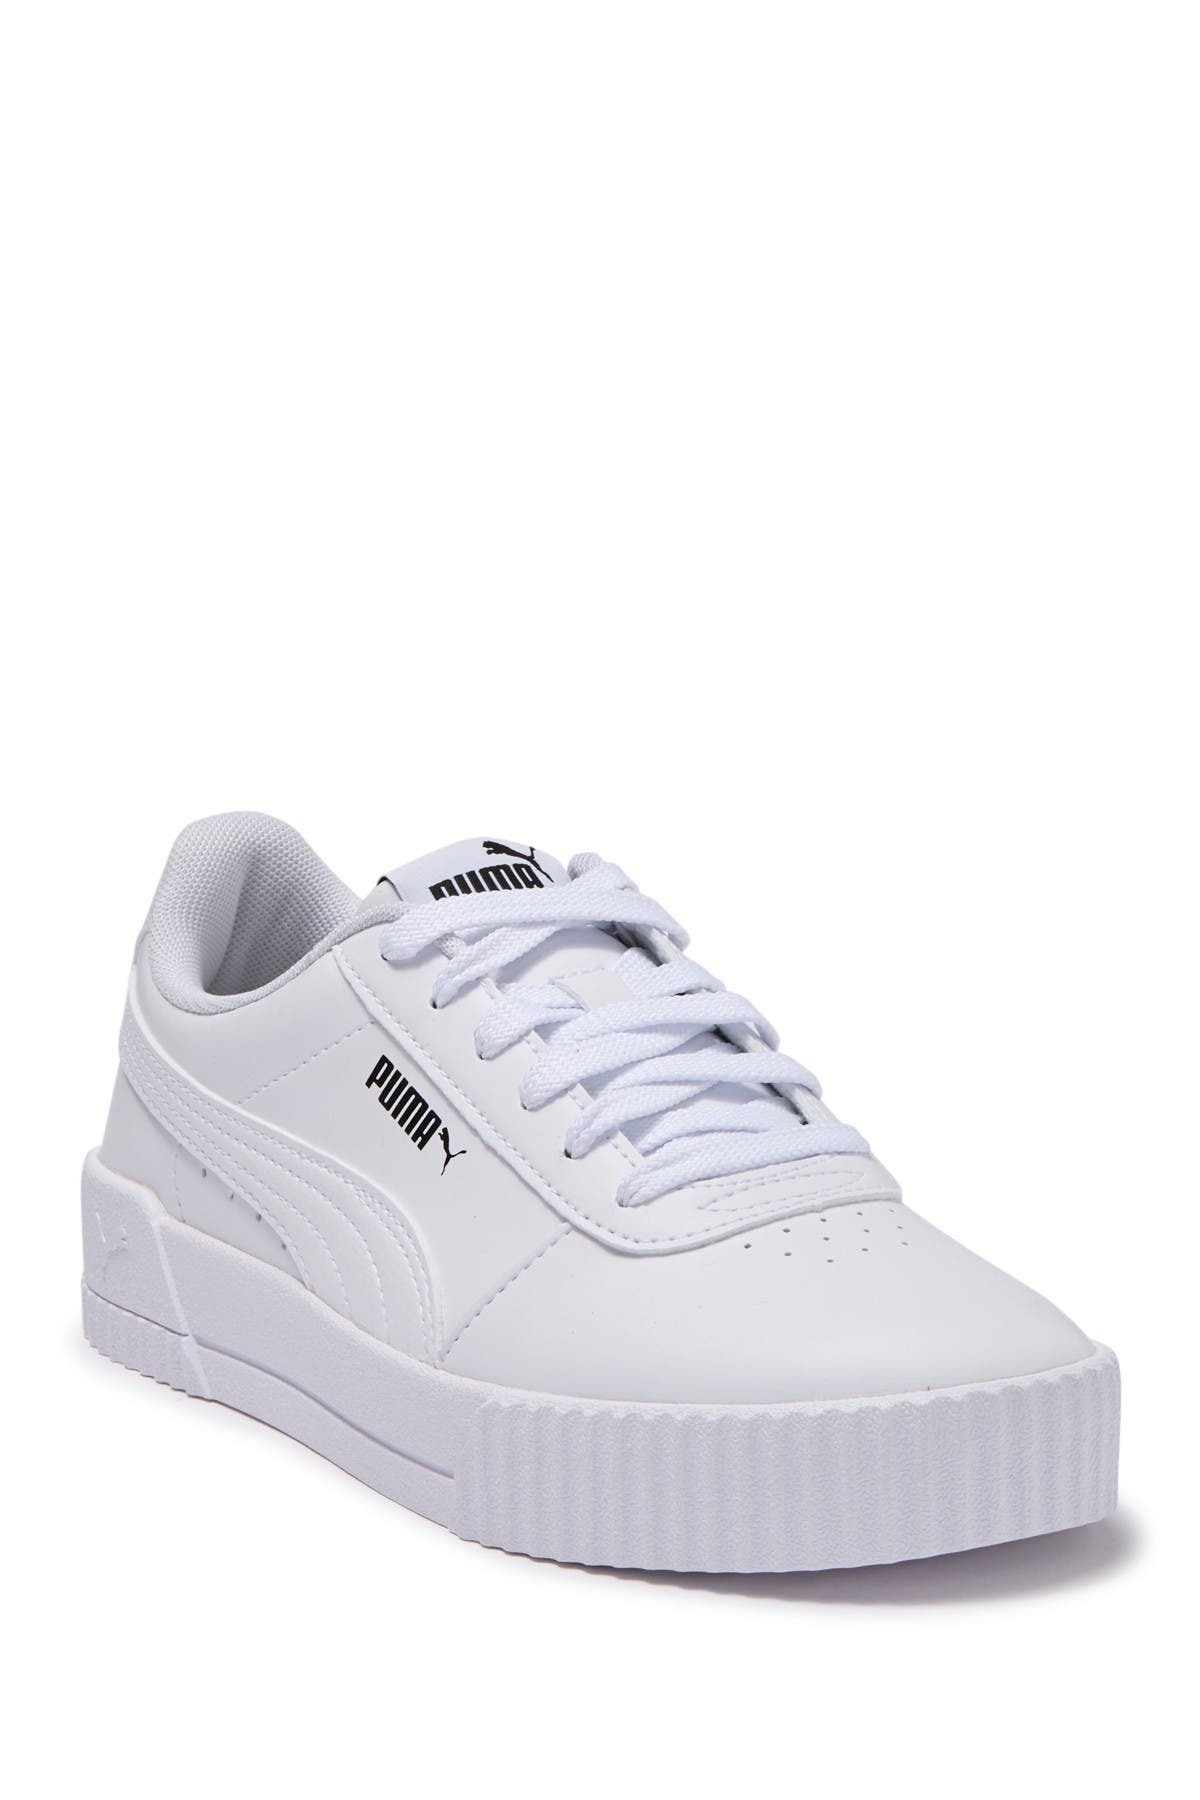 womens platform white sneakers